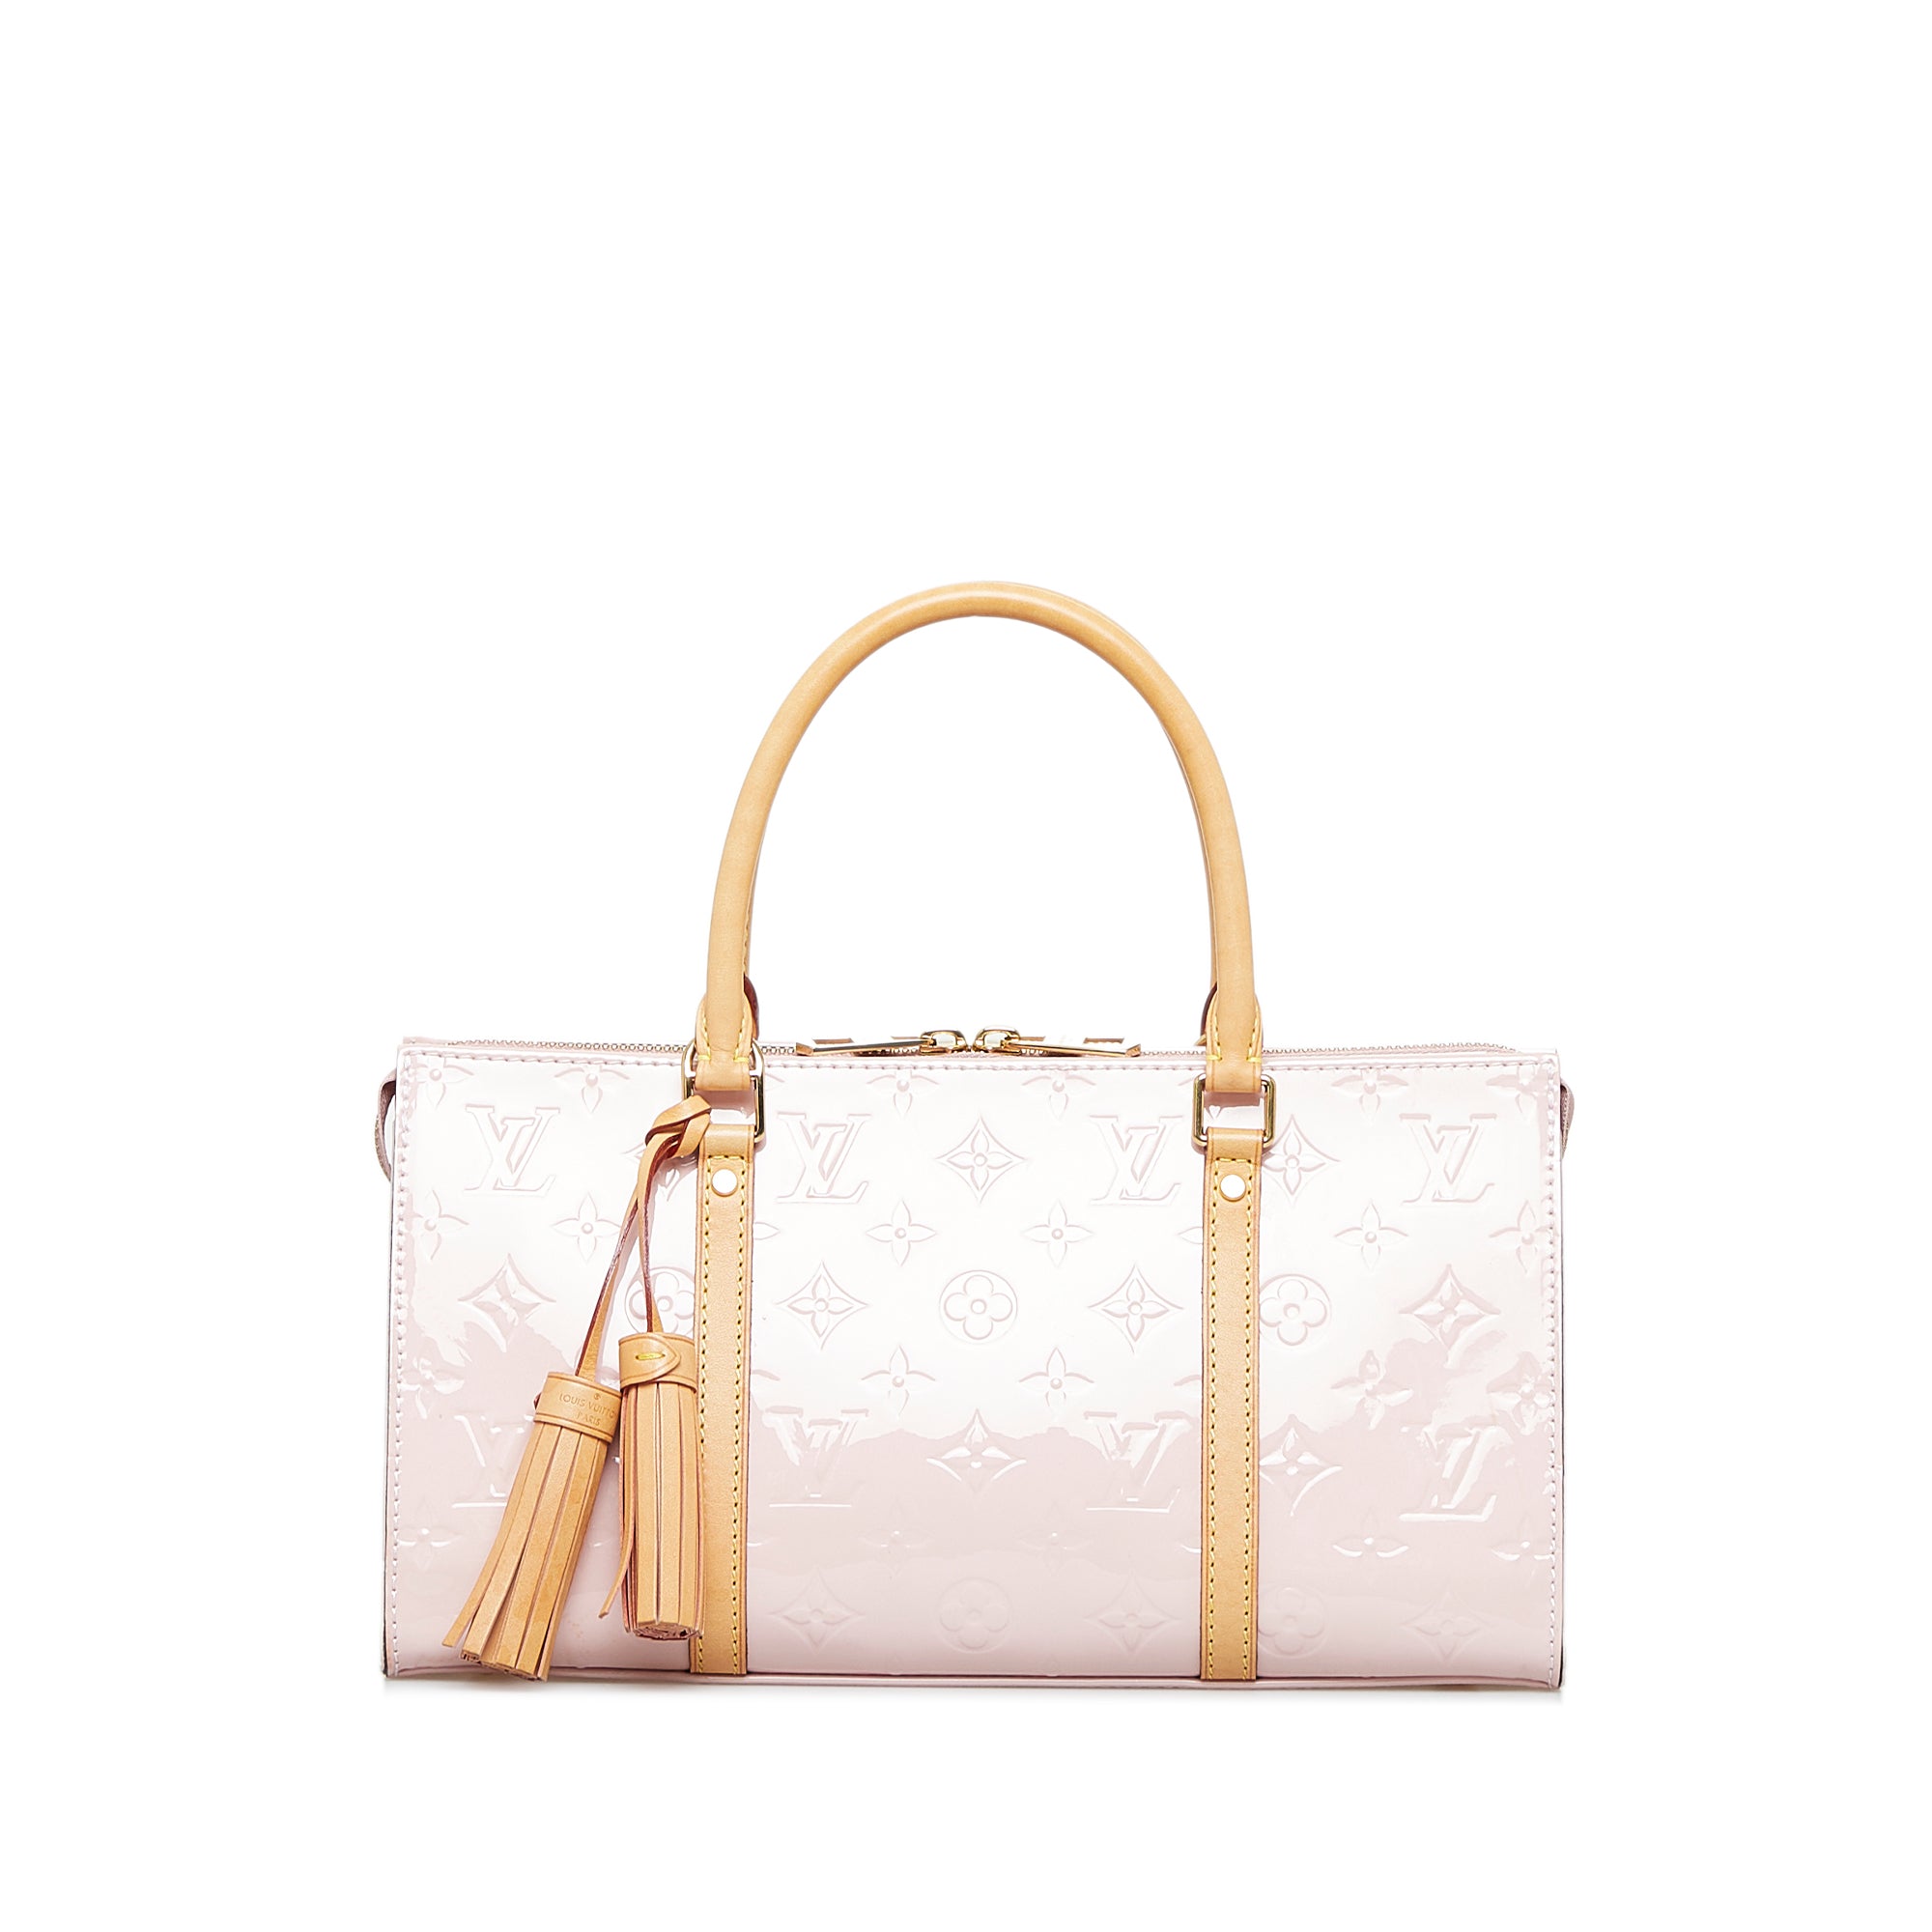 Louis Vuitton, Bags, Pink Vernis Louis Vuitton Handbag